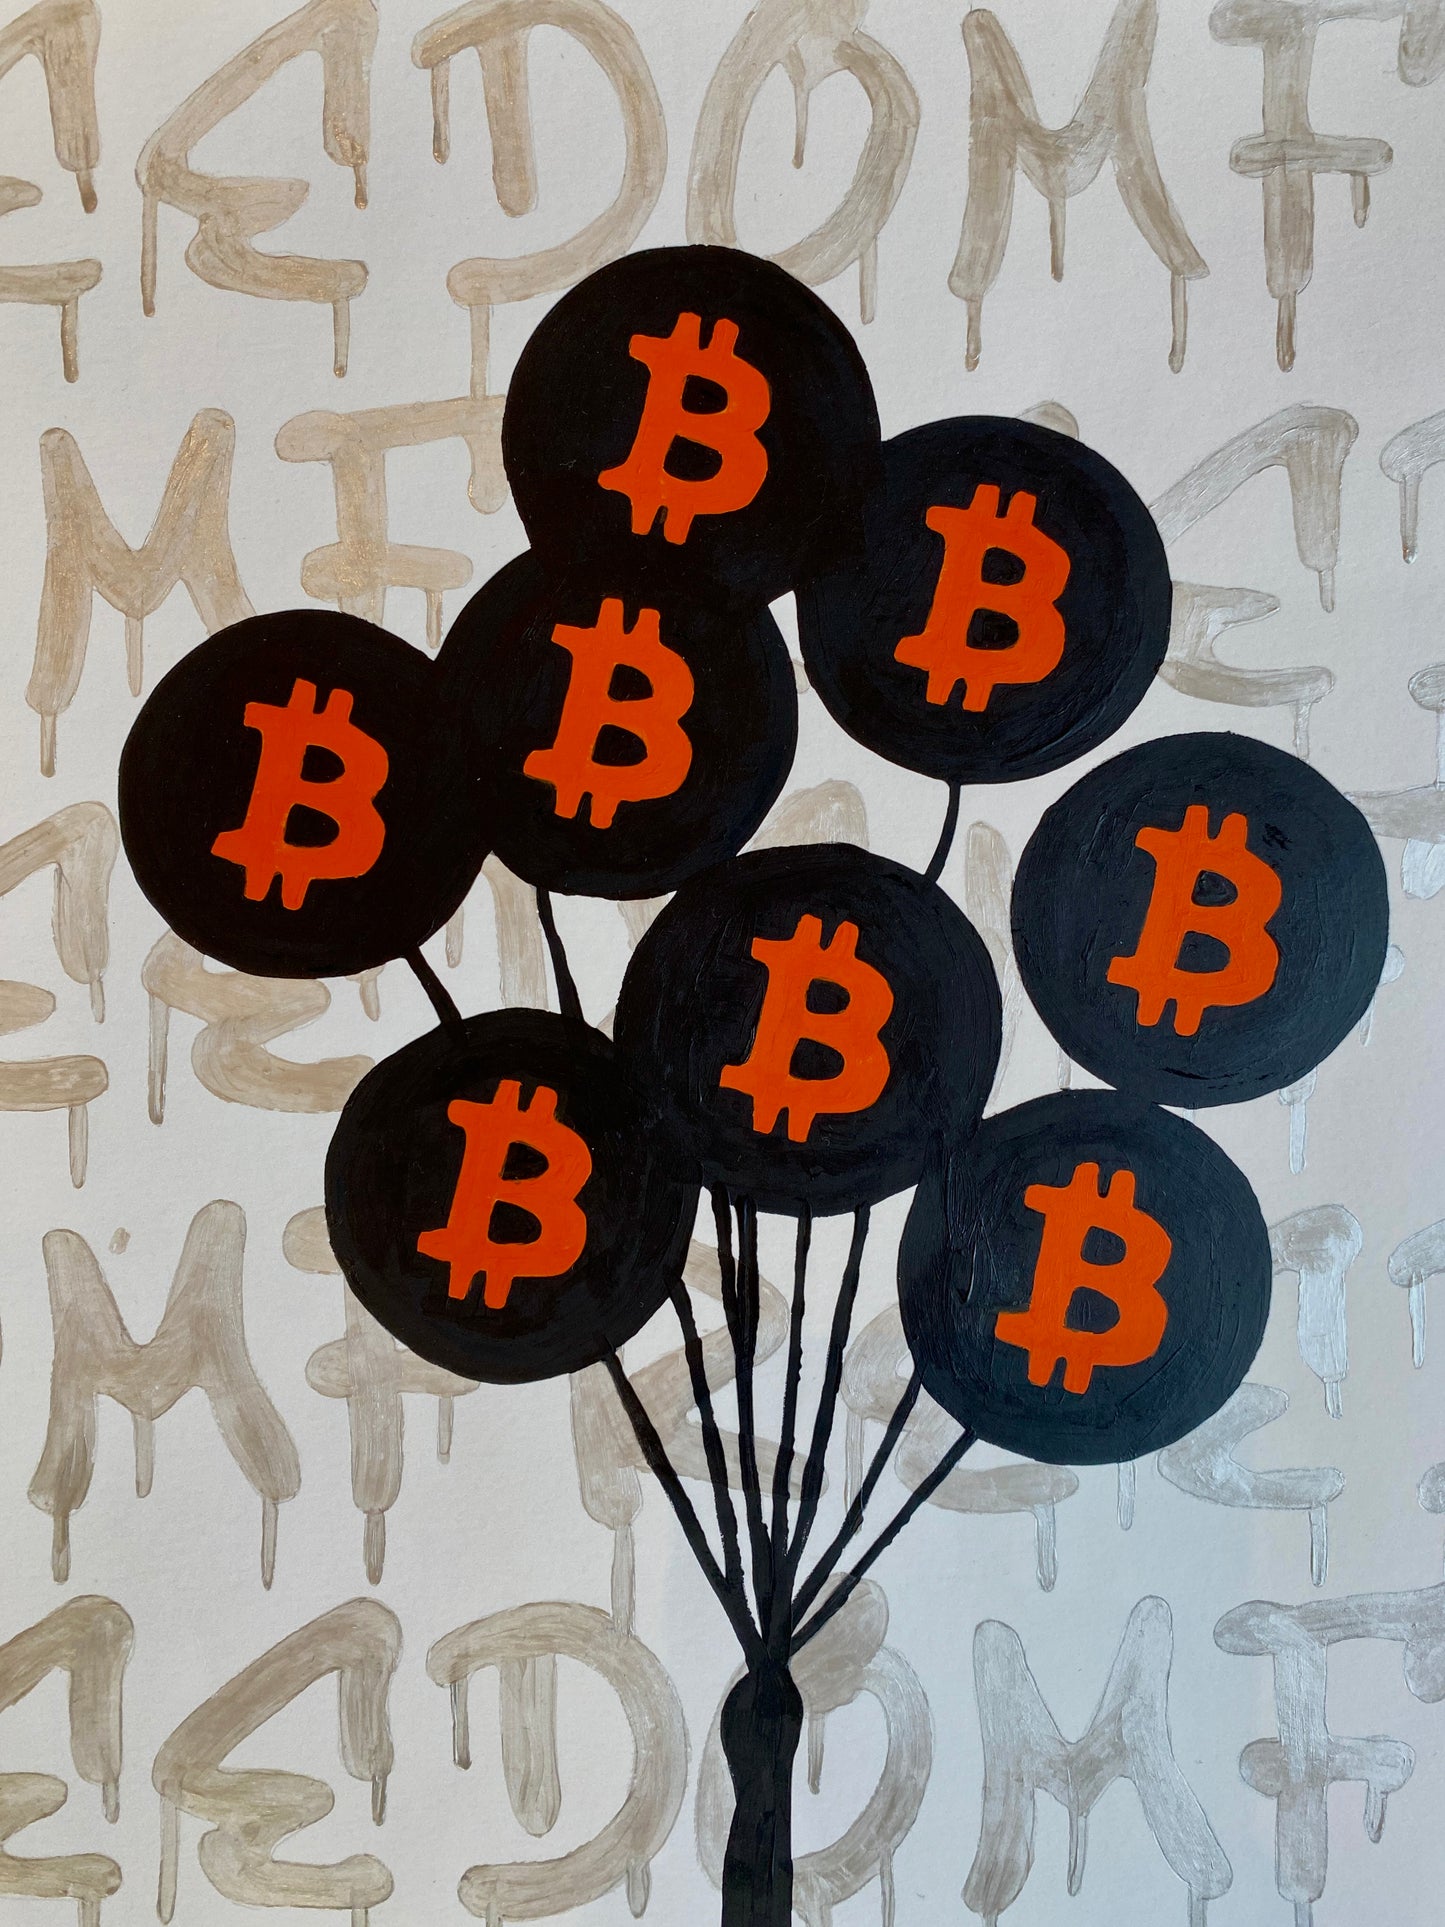 Acrylic Paint "Bitcoin is Freedom"